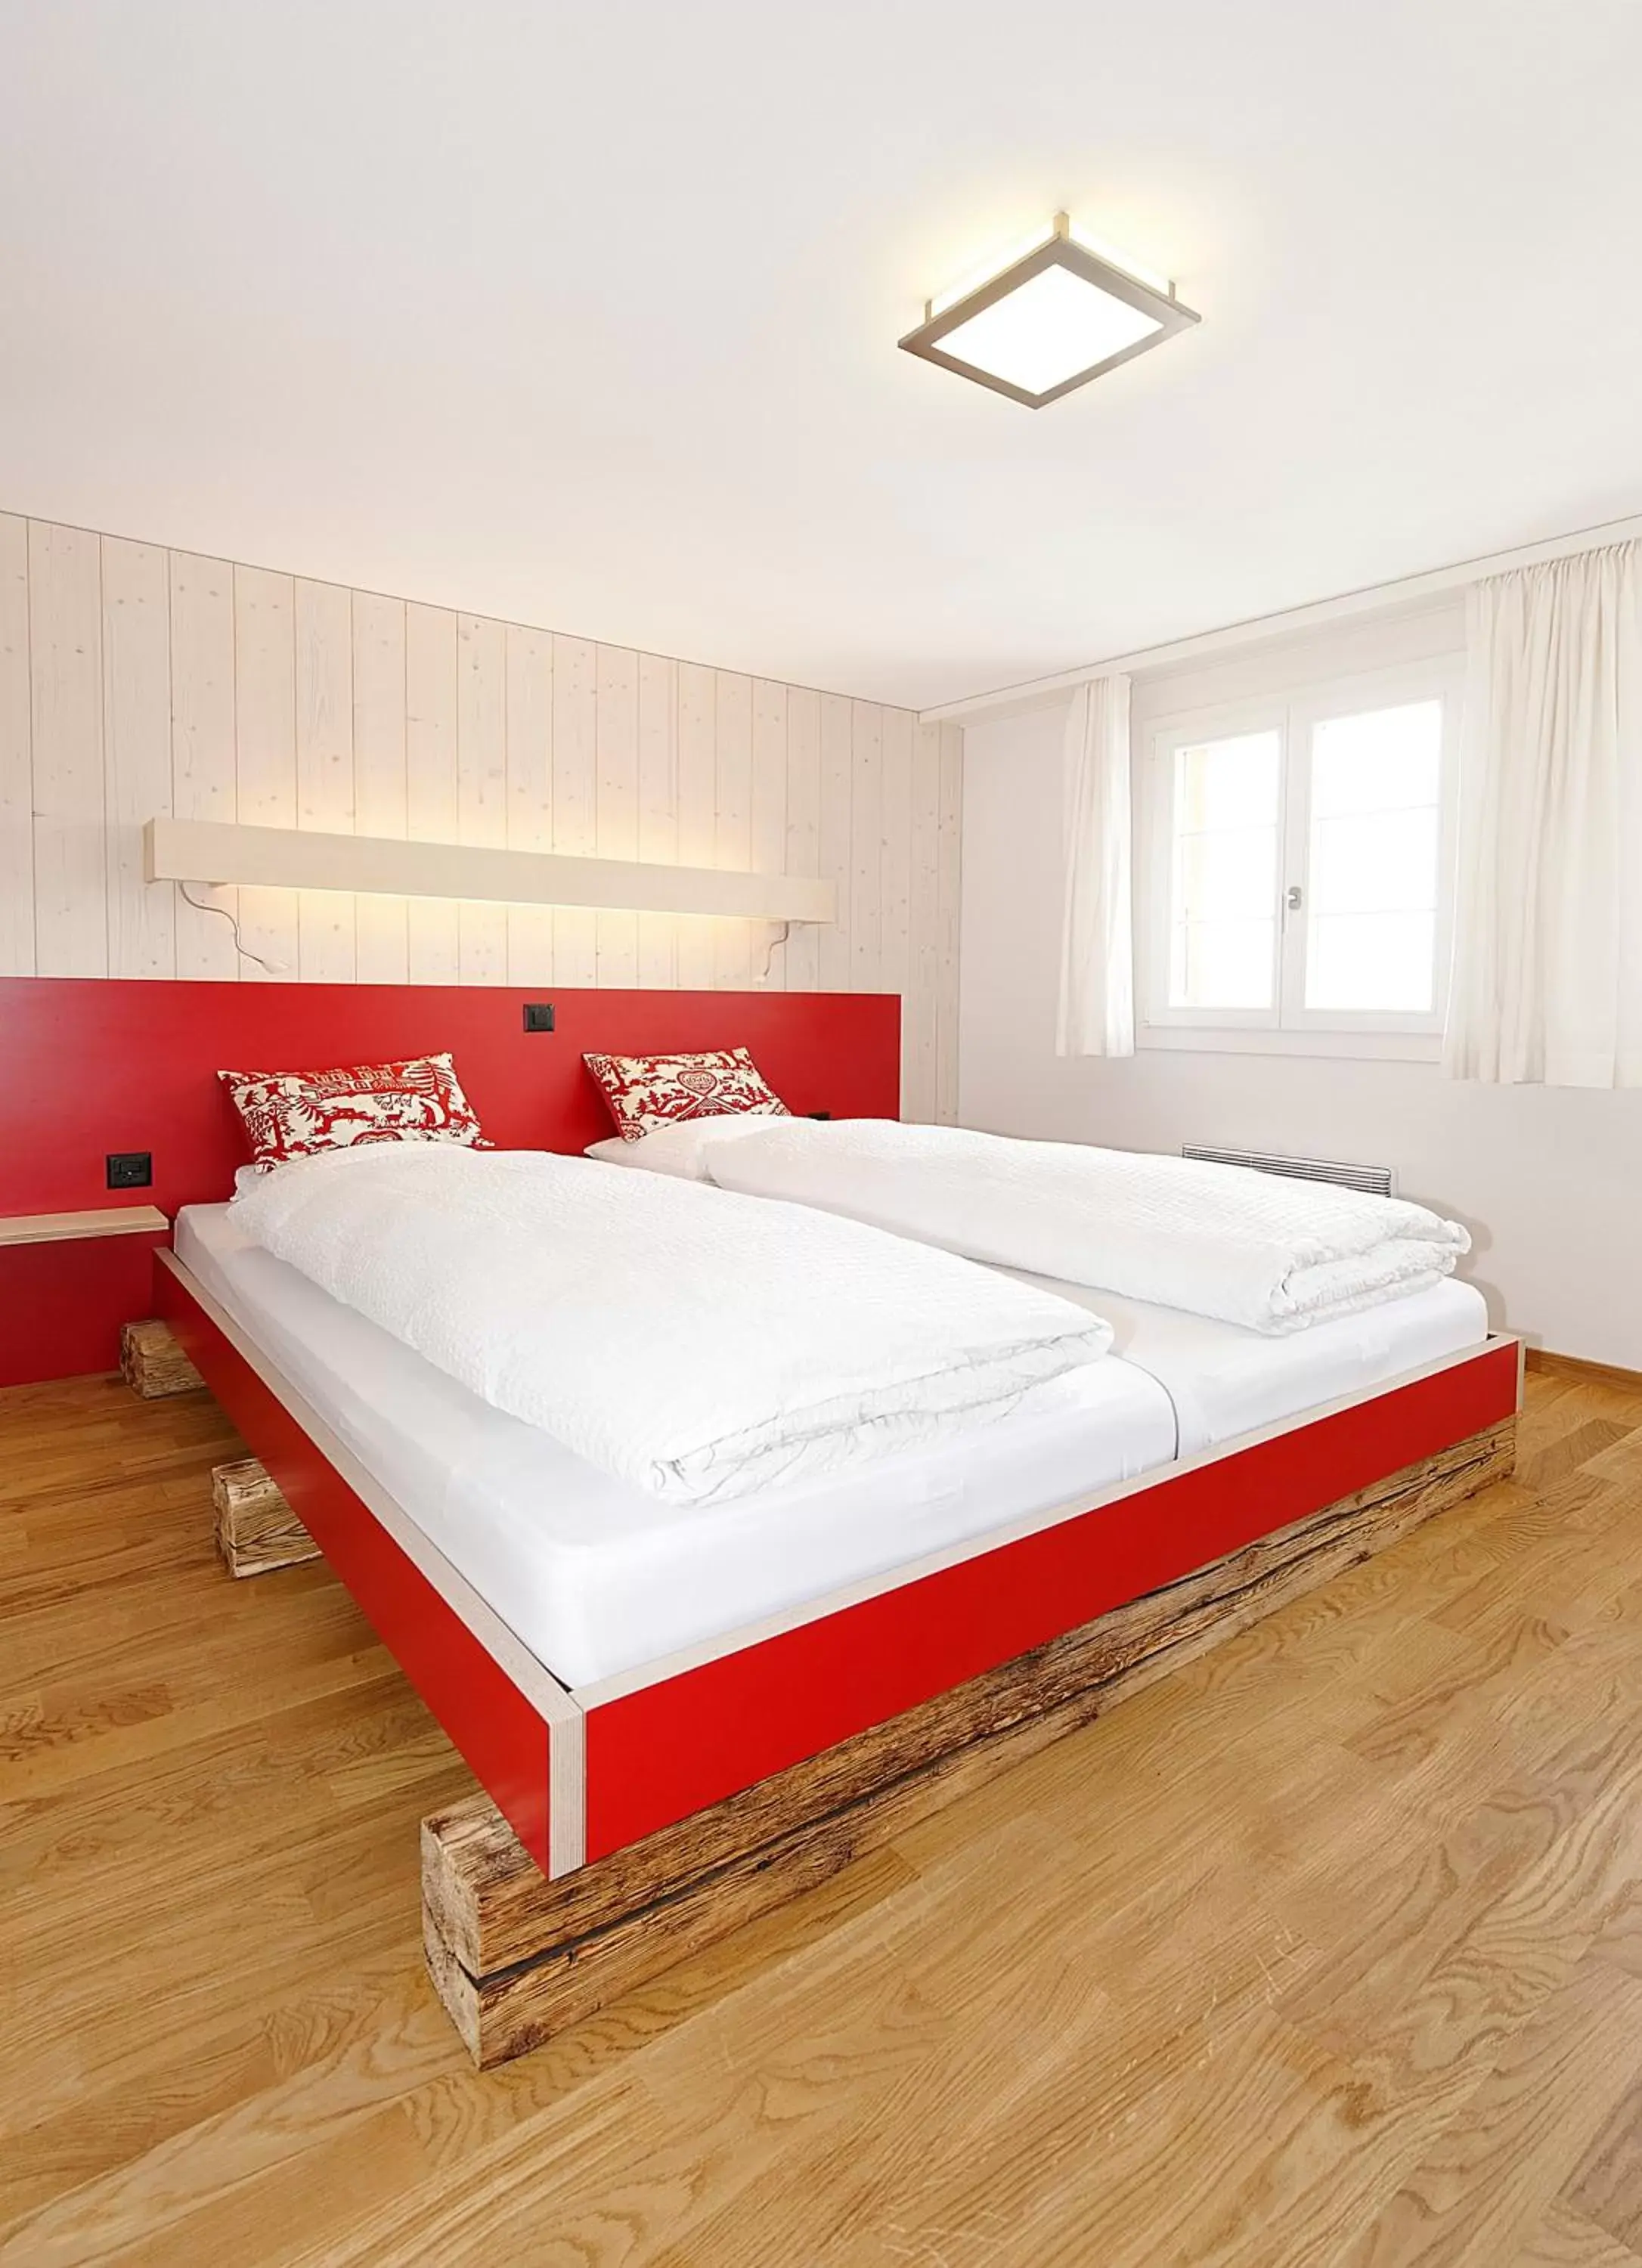 Bed in Alpinhotel Bort